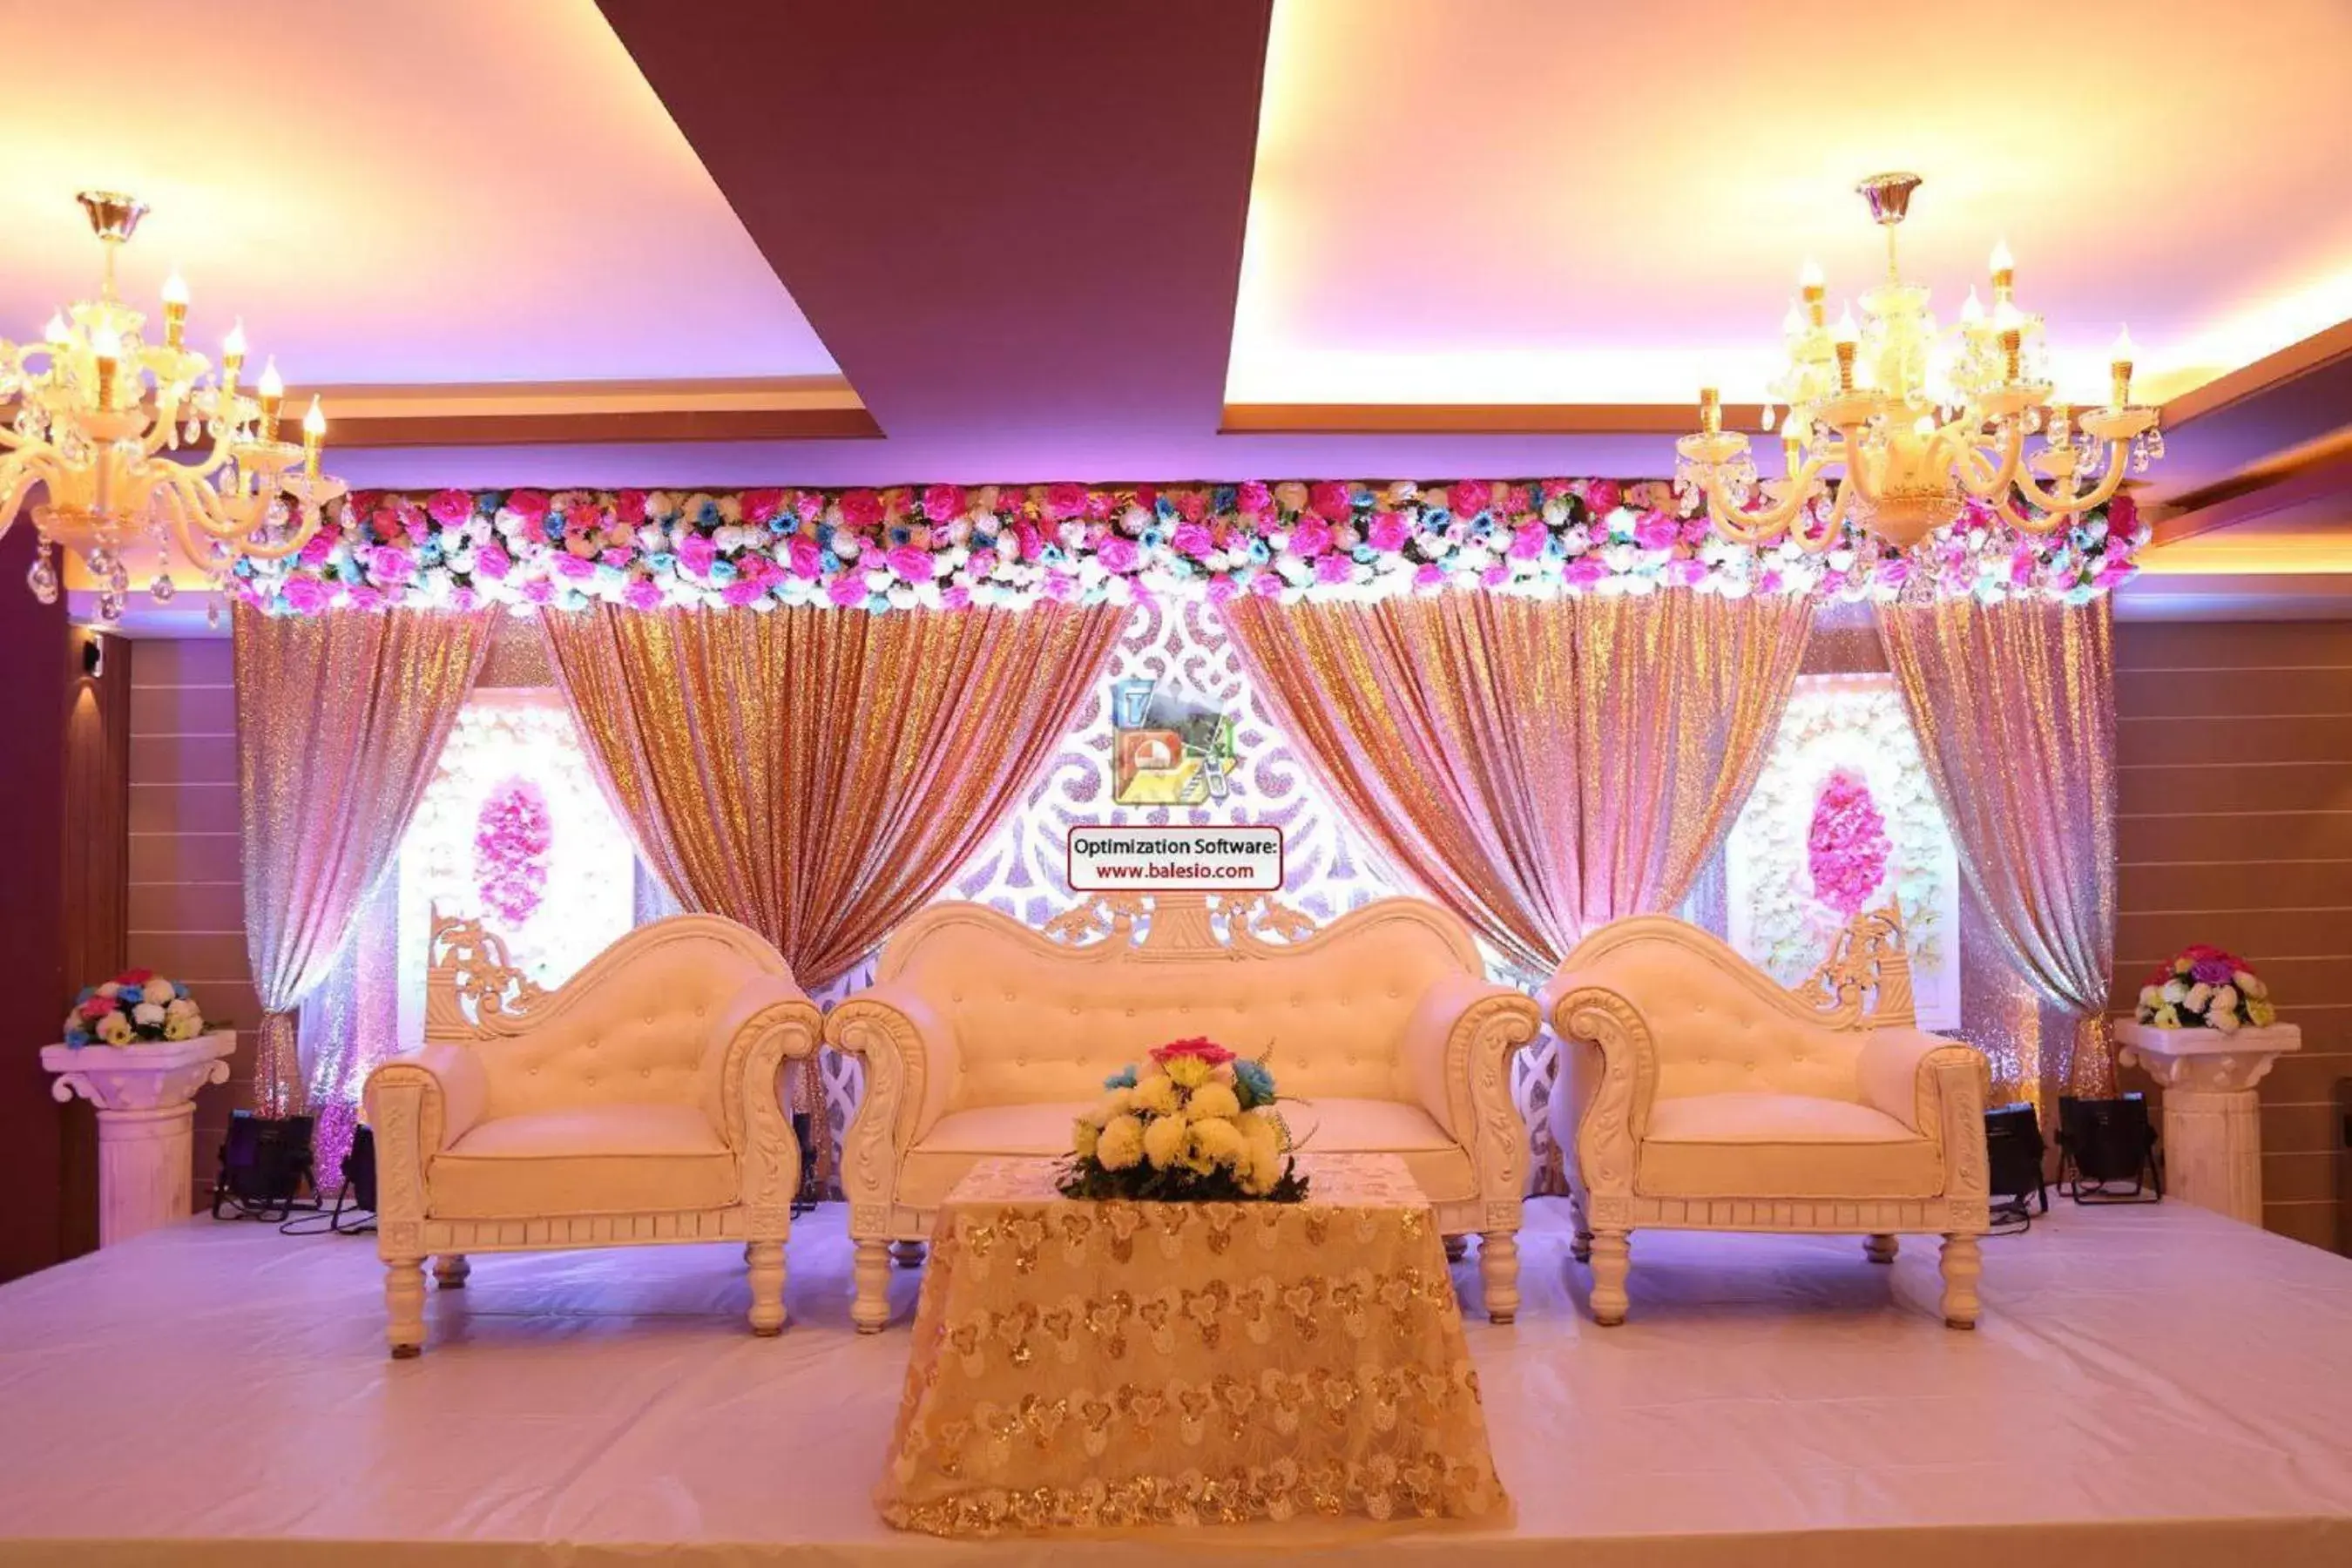 Banquet/Function facilities, Banquet Facilities in Asia Hotel & Resorts